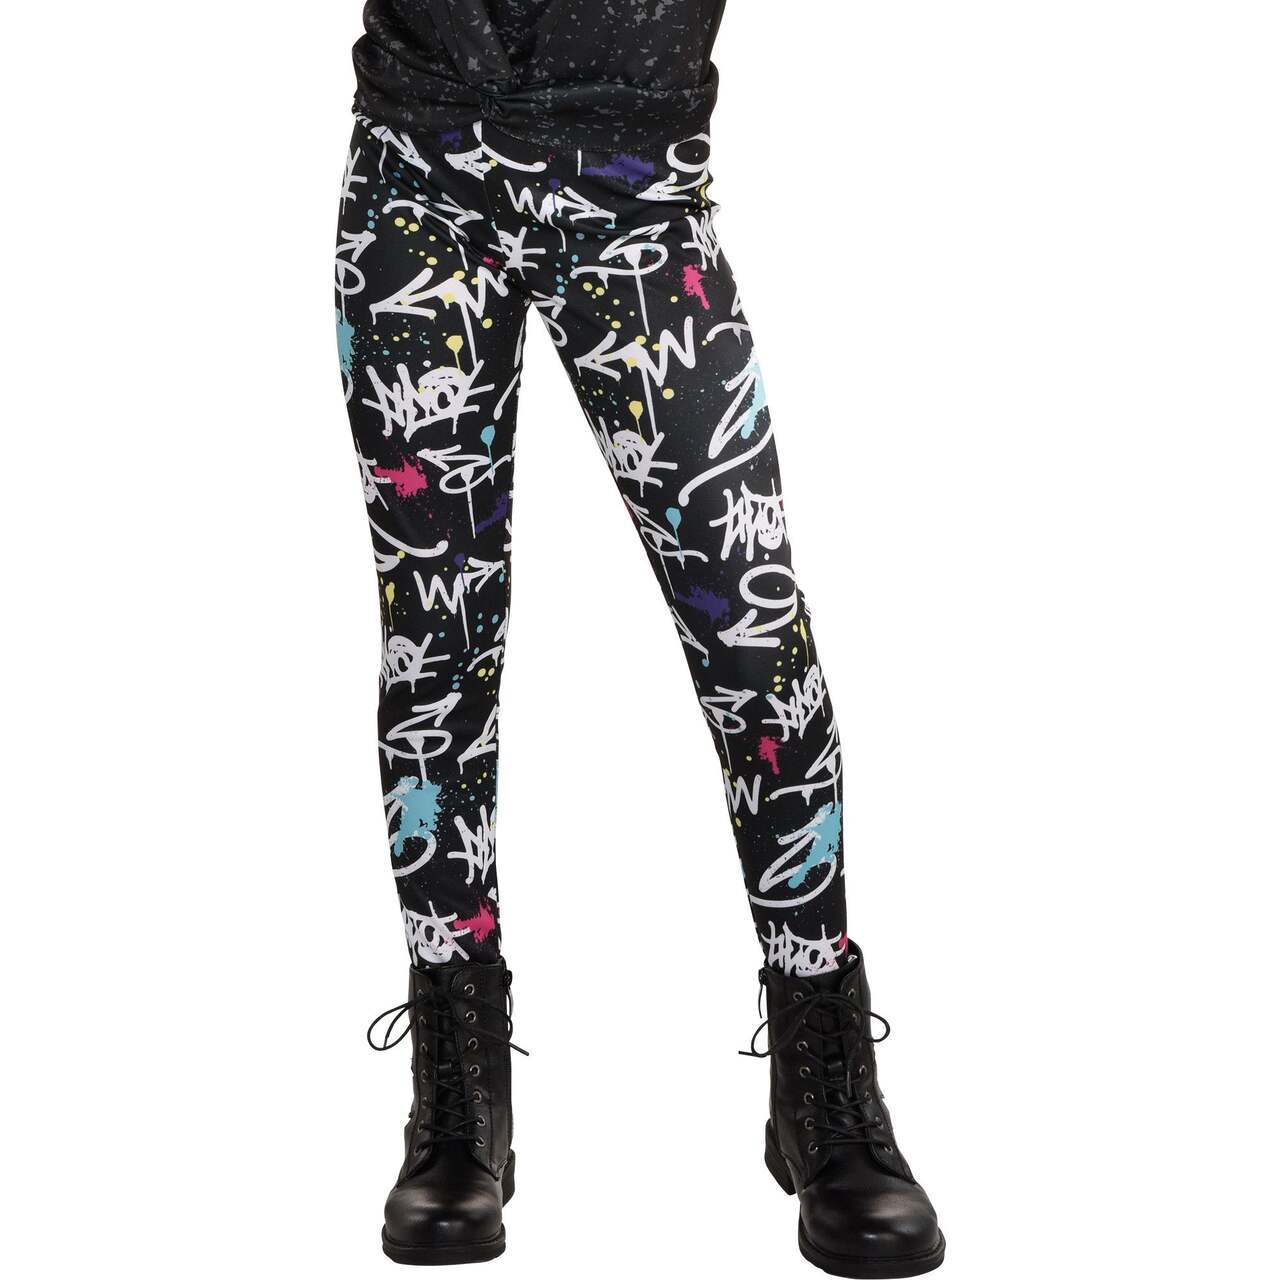 Kids' Dark Side Punk Graffiti Leggings, Multi-Coloured, One Size, Wearable  Costume Accessory for Halloween